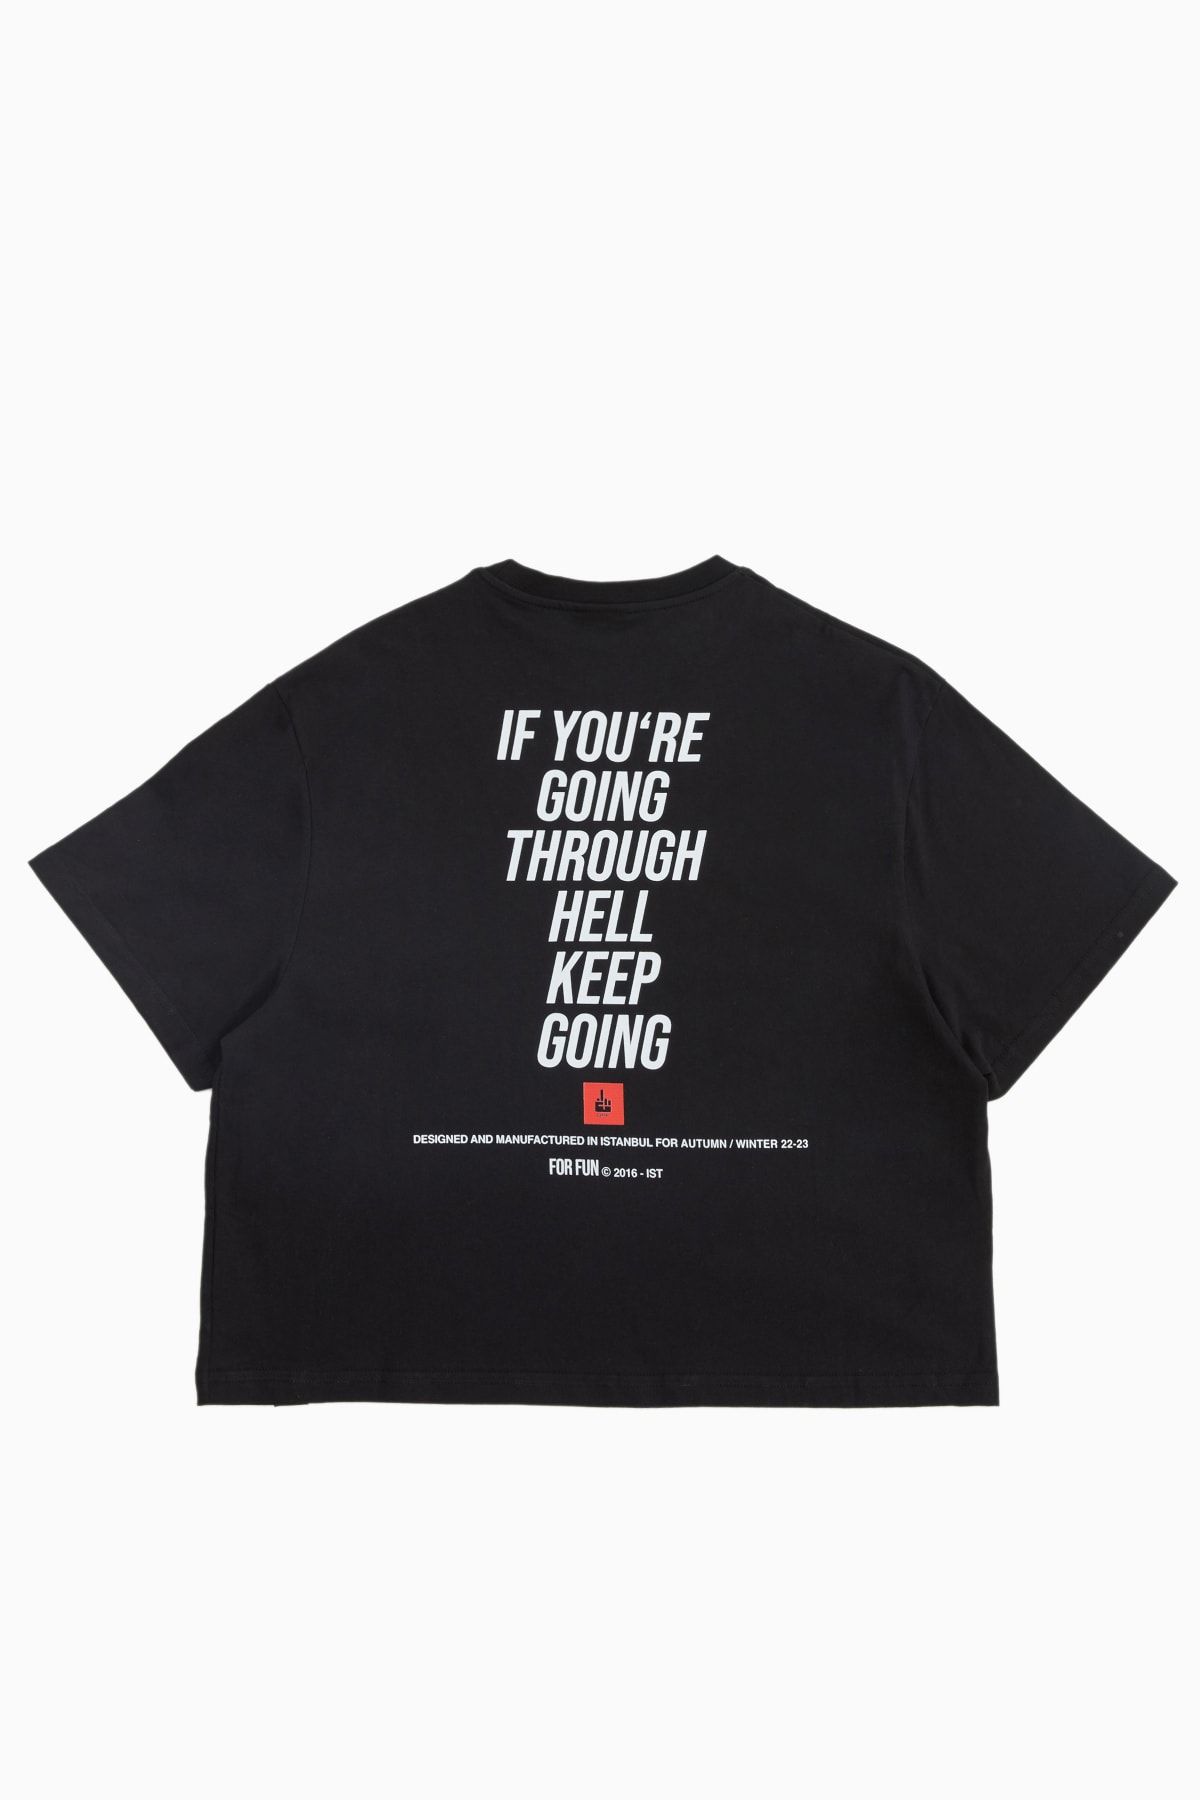 For Fun If You're Going Through Hell, Keep Going / Women Oversize T-shirt